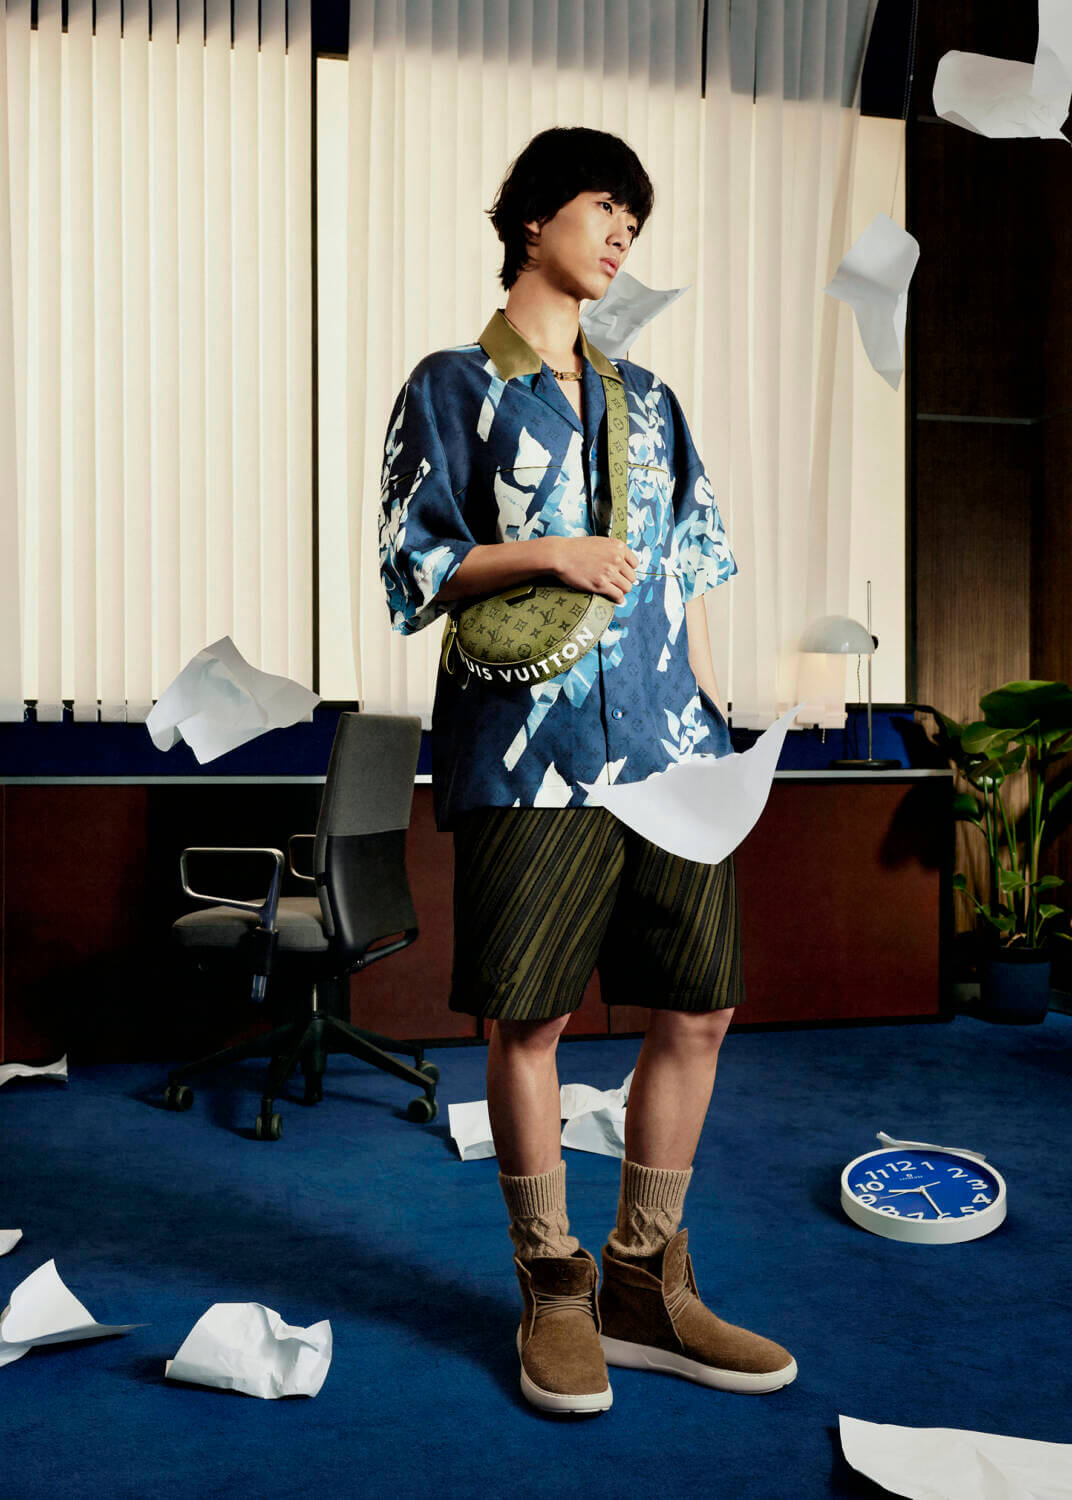 Louis Vuitton Embraces Unbridled Freedom - V Magazine